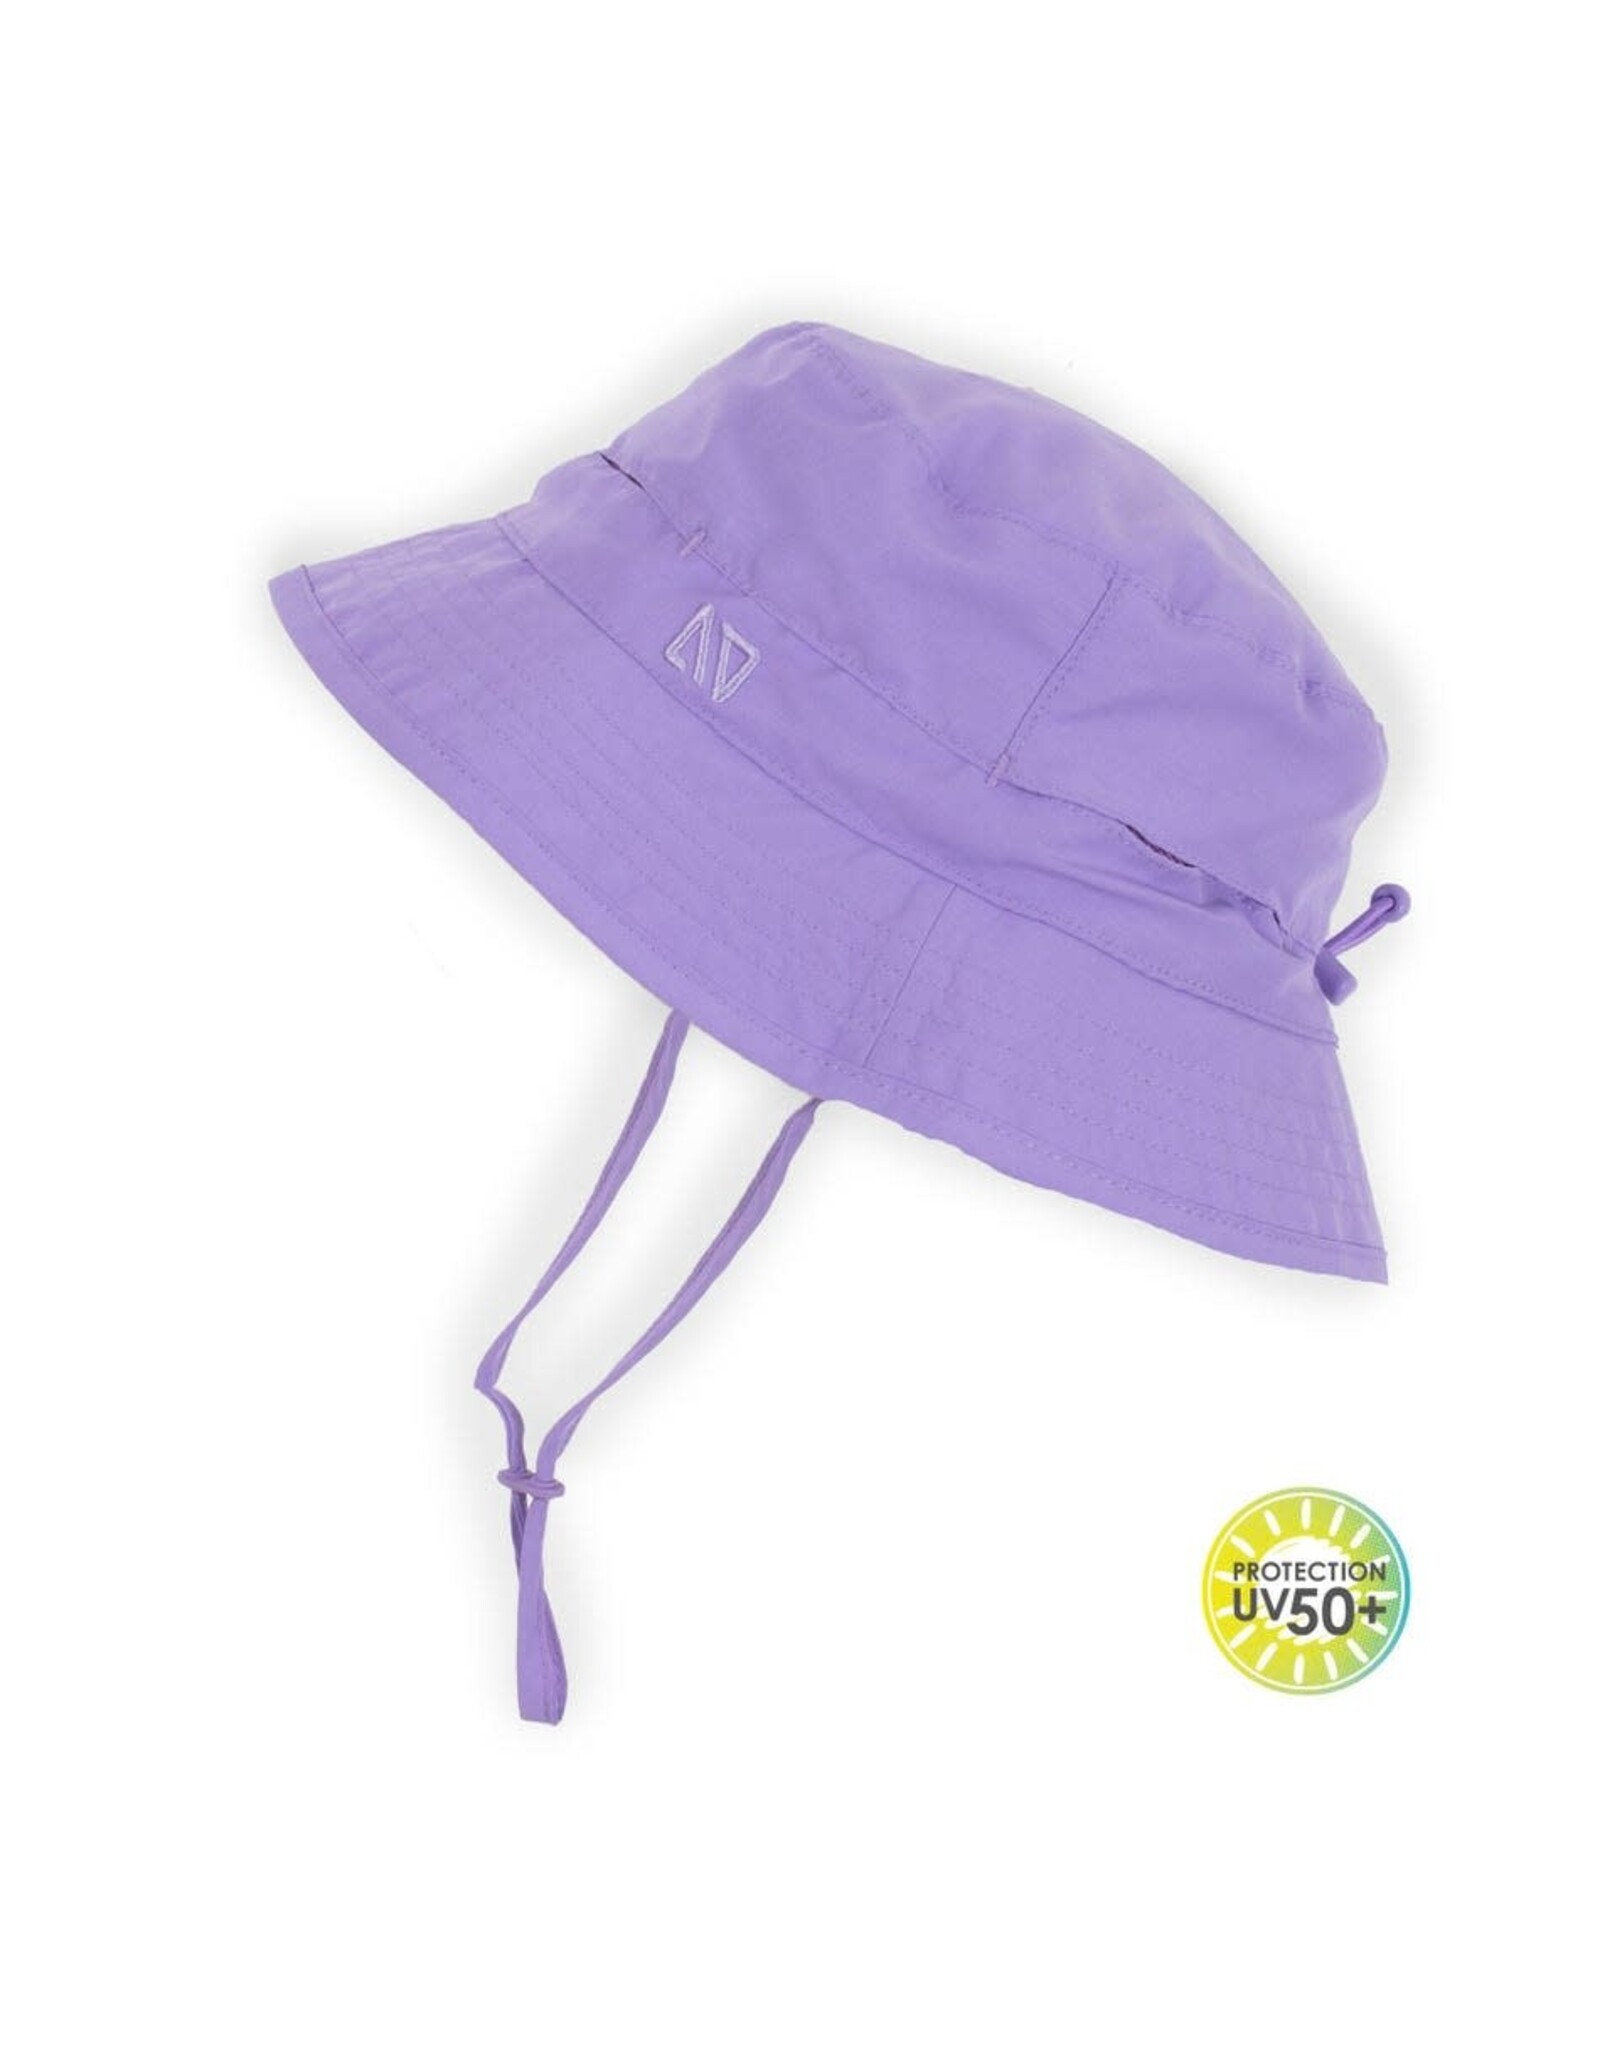 Noruk Light Purple UV Sun Hat